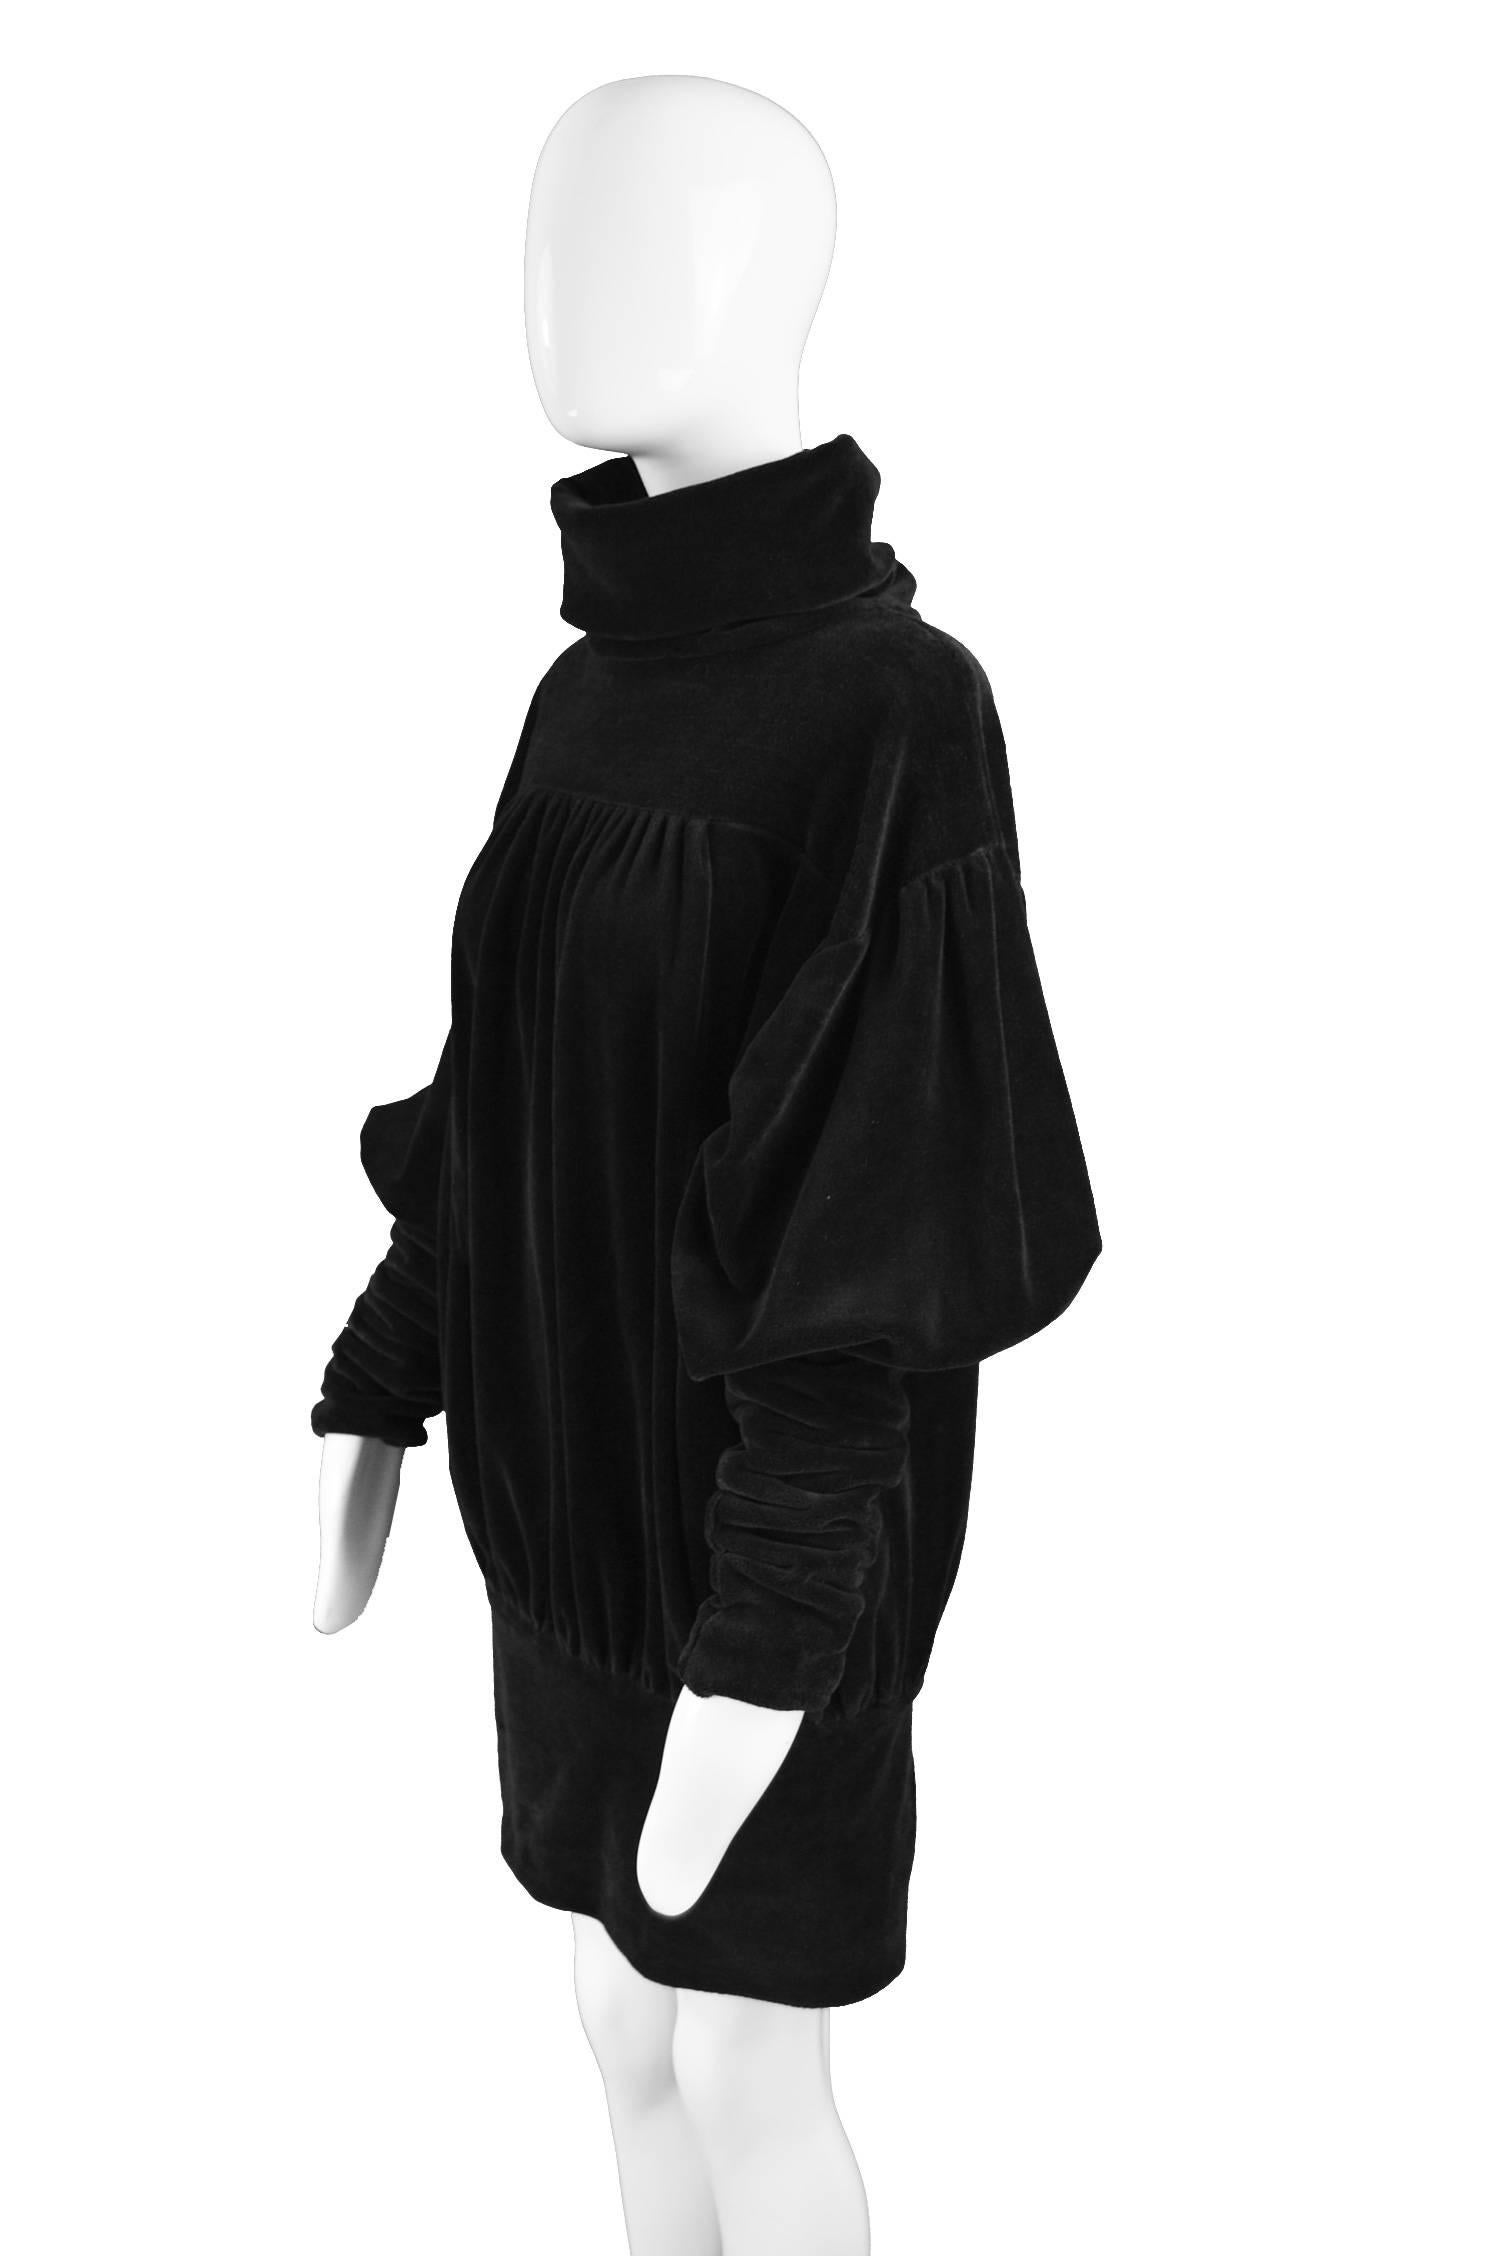 Gina Fratini Avant Garde Black Puff Sleeve Velour Dress, 1970s 2